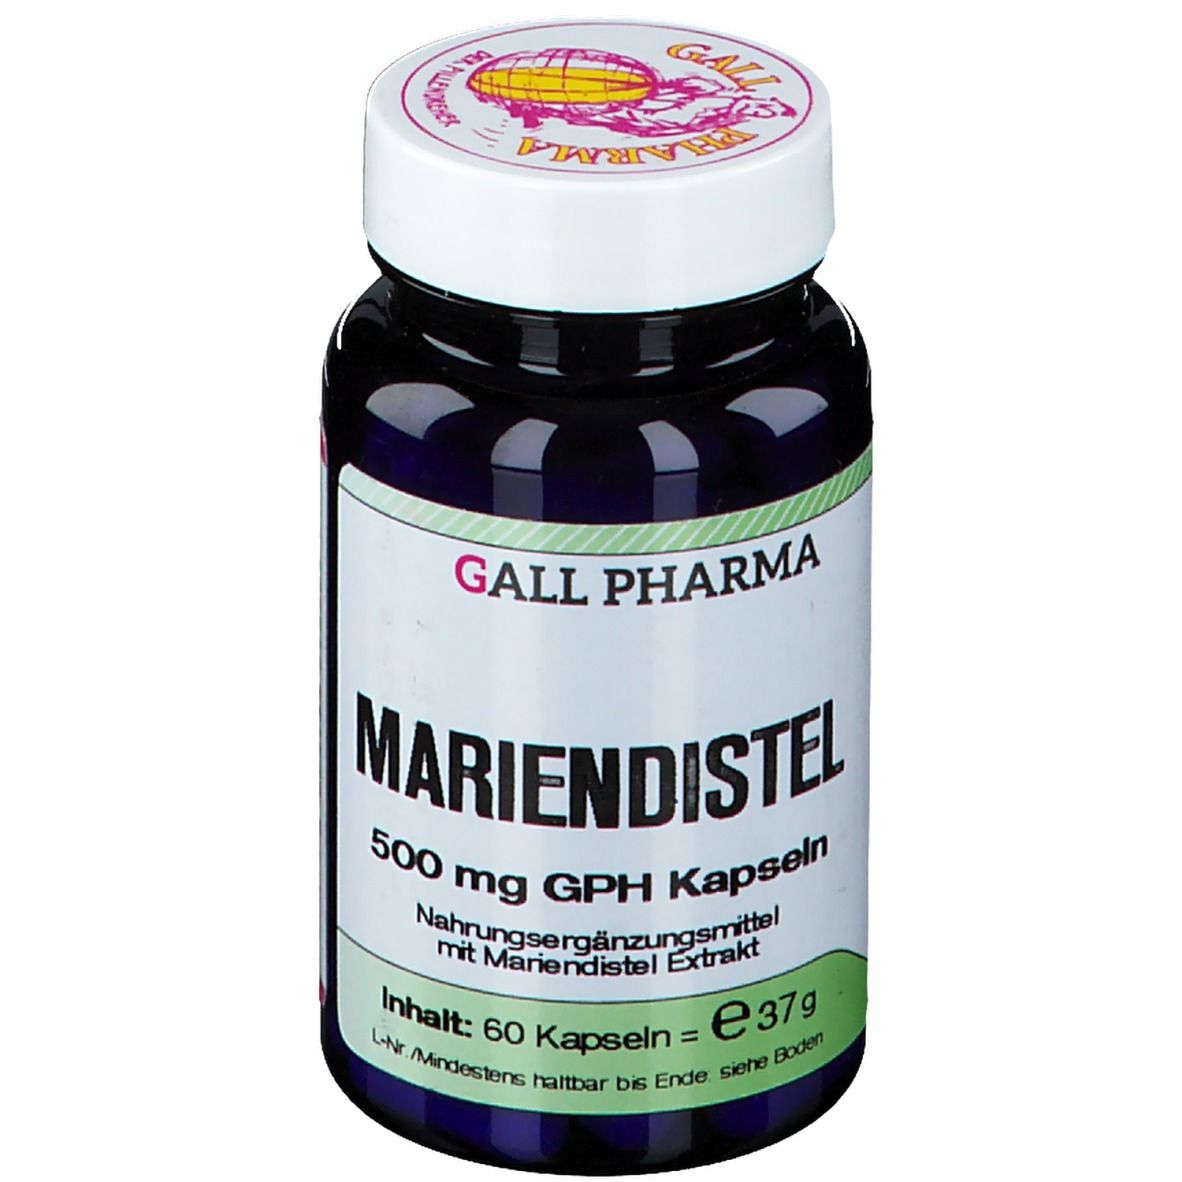 GALL PHARMA Mariendistel 500 mg GPH